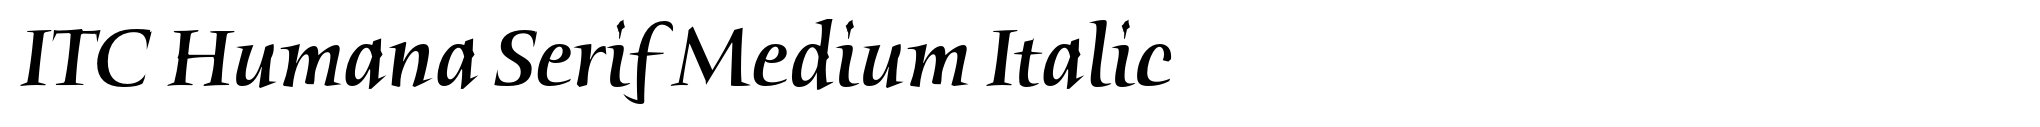 ITC Humana Serif Medium Italic image